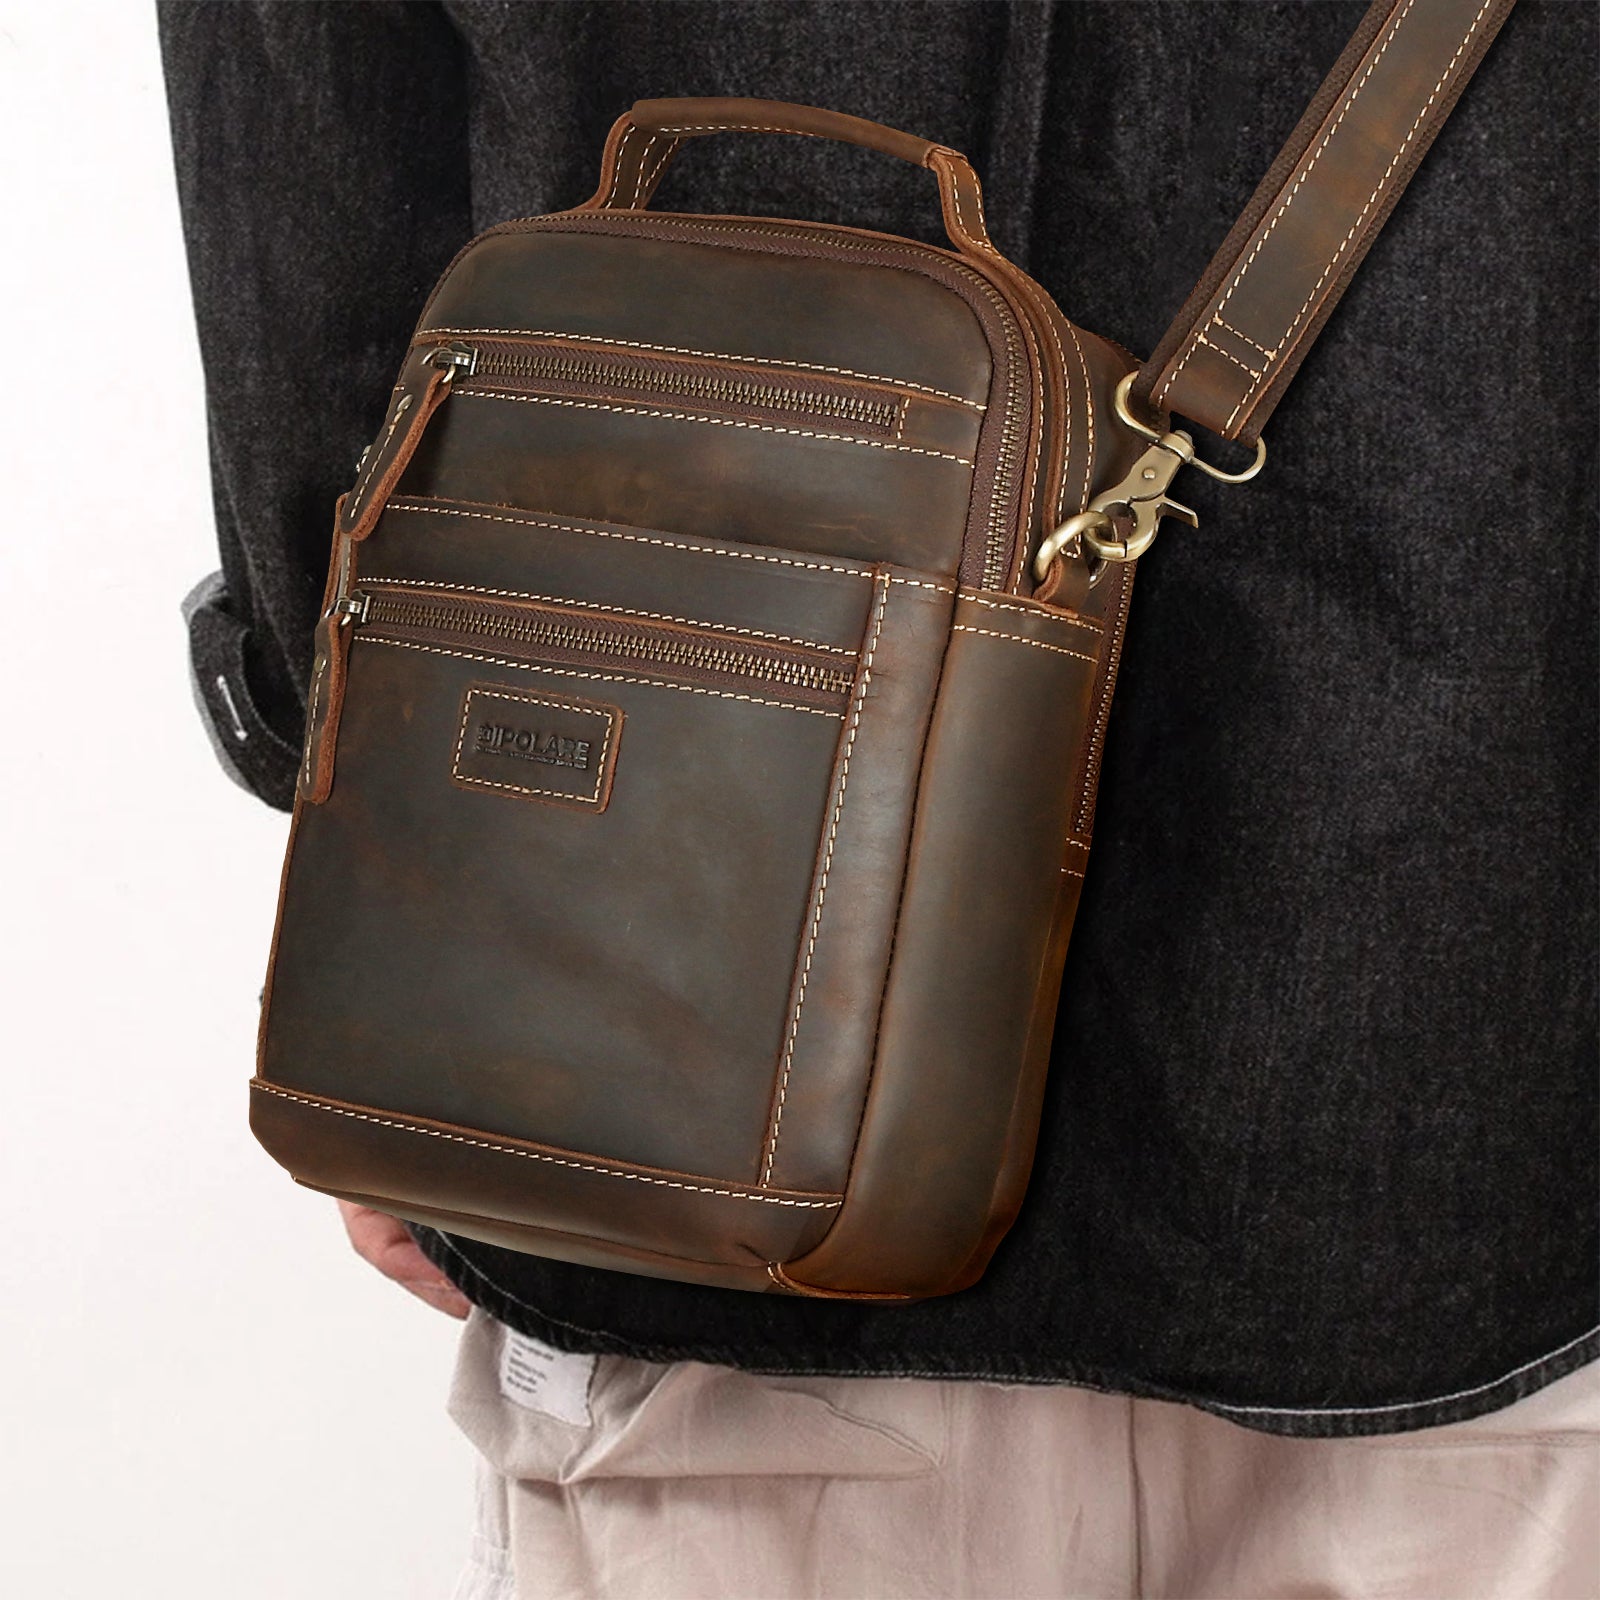 Full Grain Leather Chest Shoulder Bag Casual Business Handbag (Model Display)